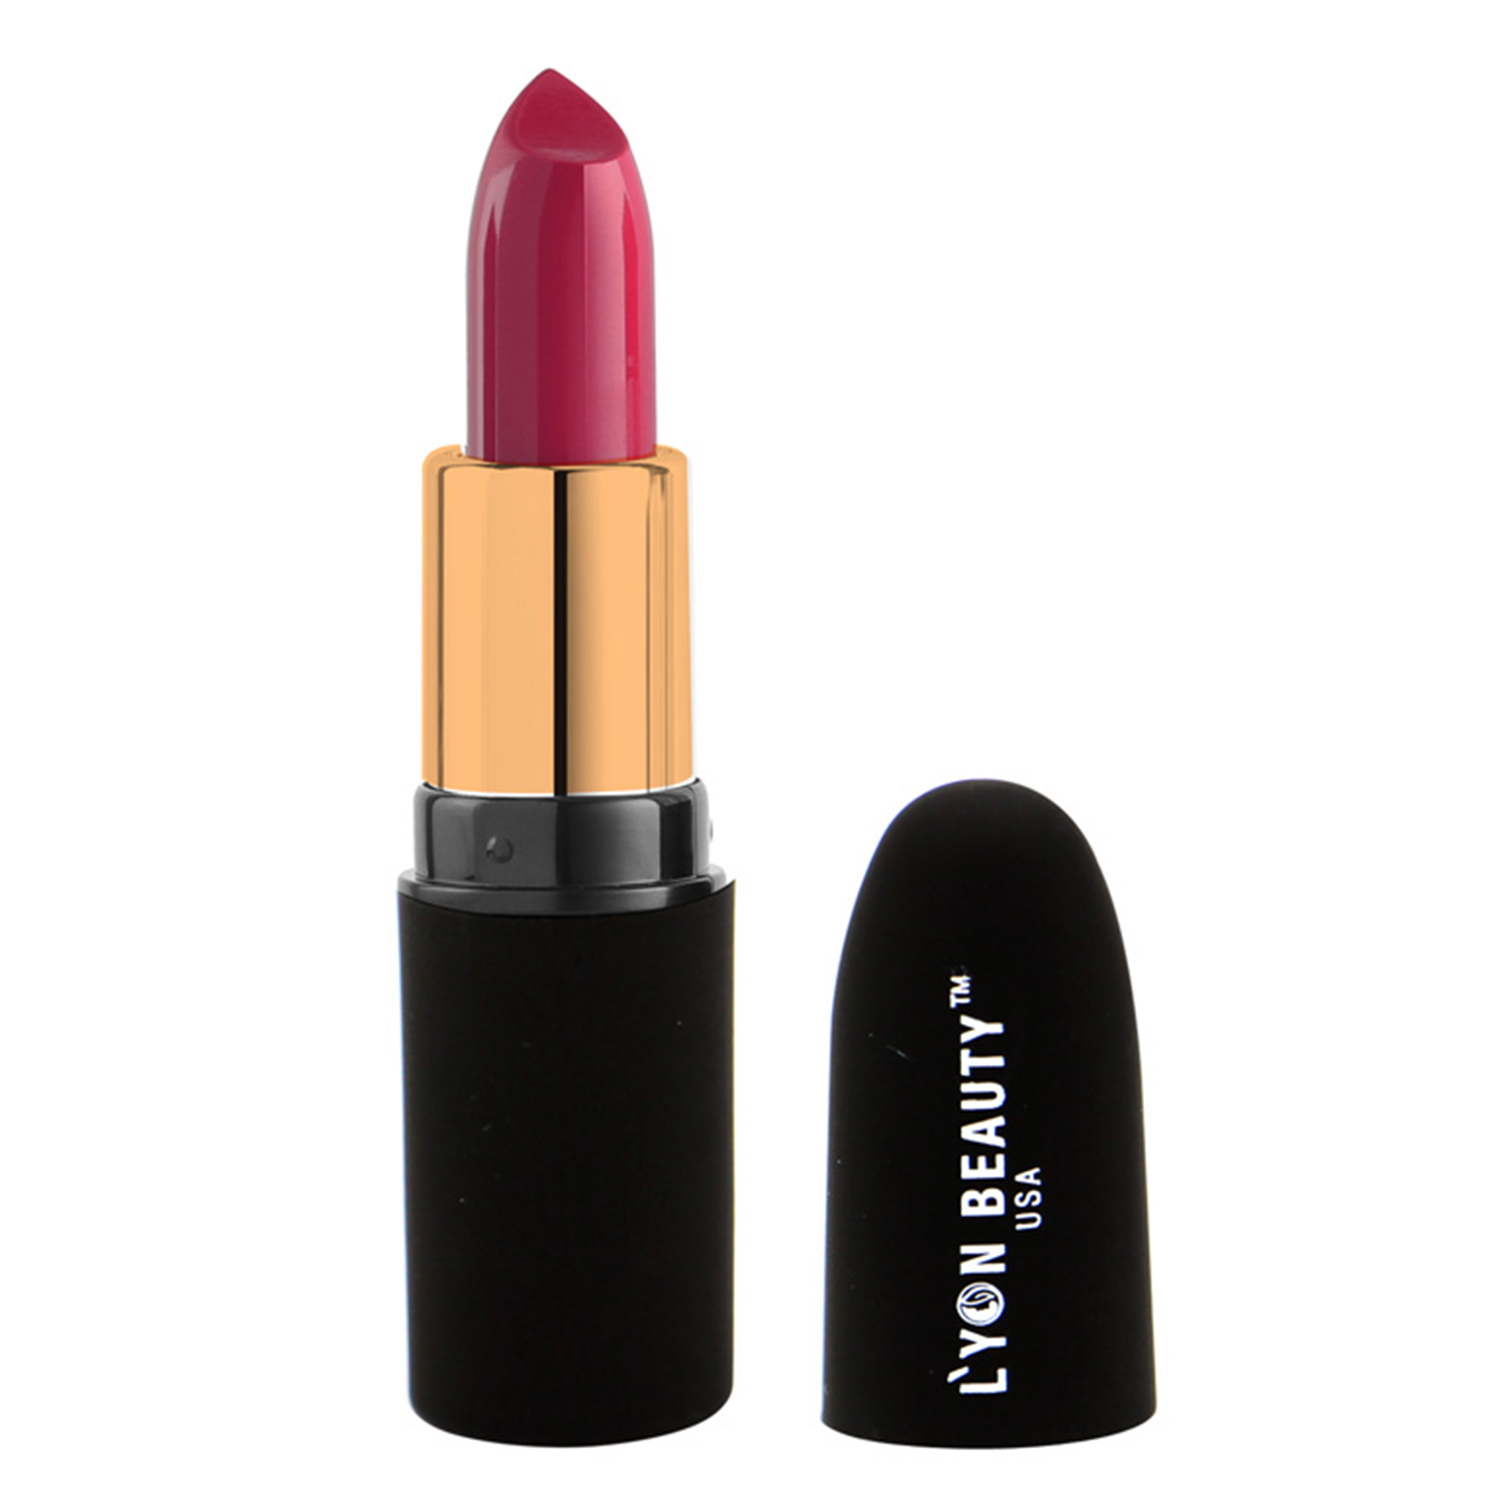 Lyon Beauty USA Pure Powder Matte Lipstick, 3.5gm-N 216 Lust On